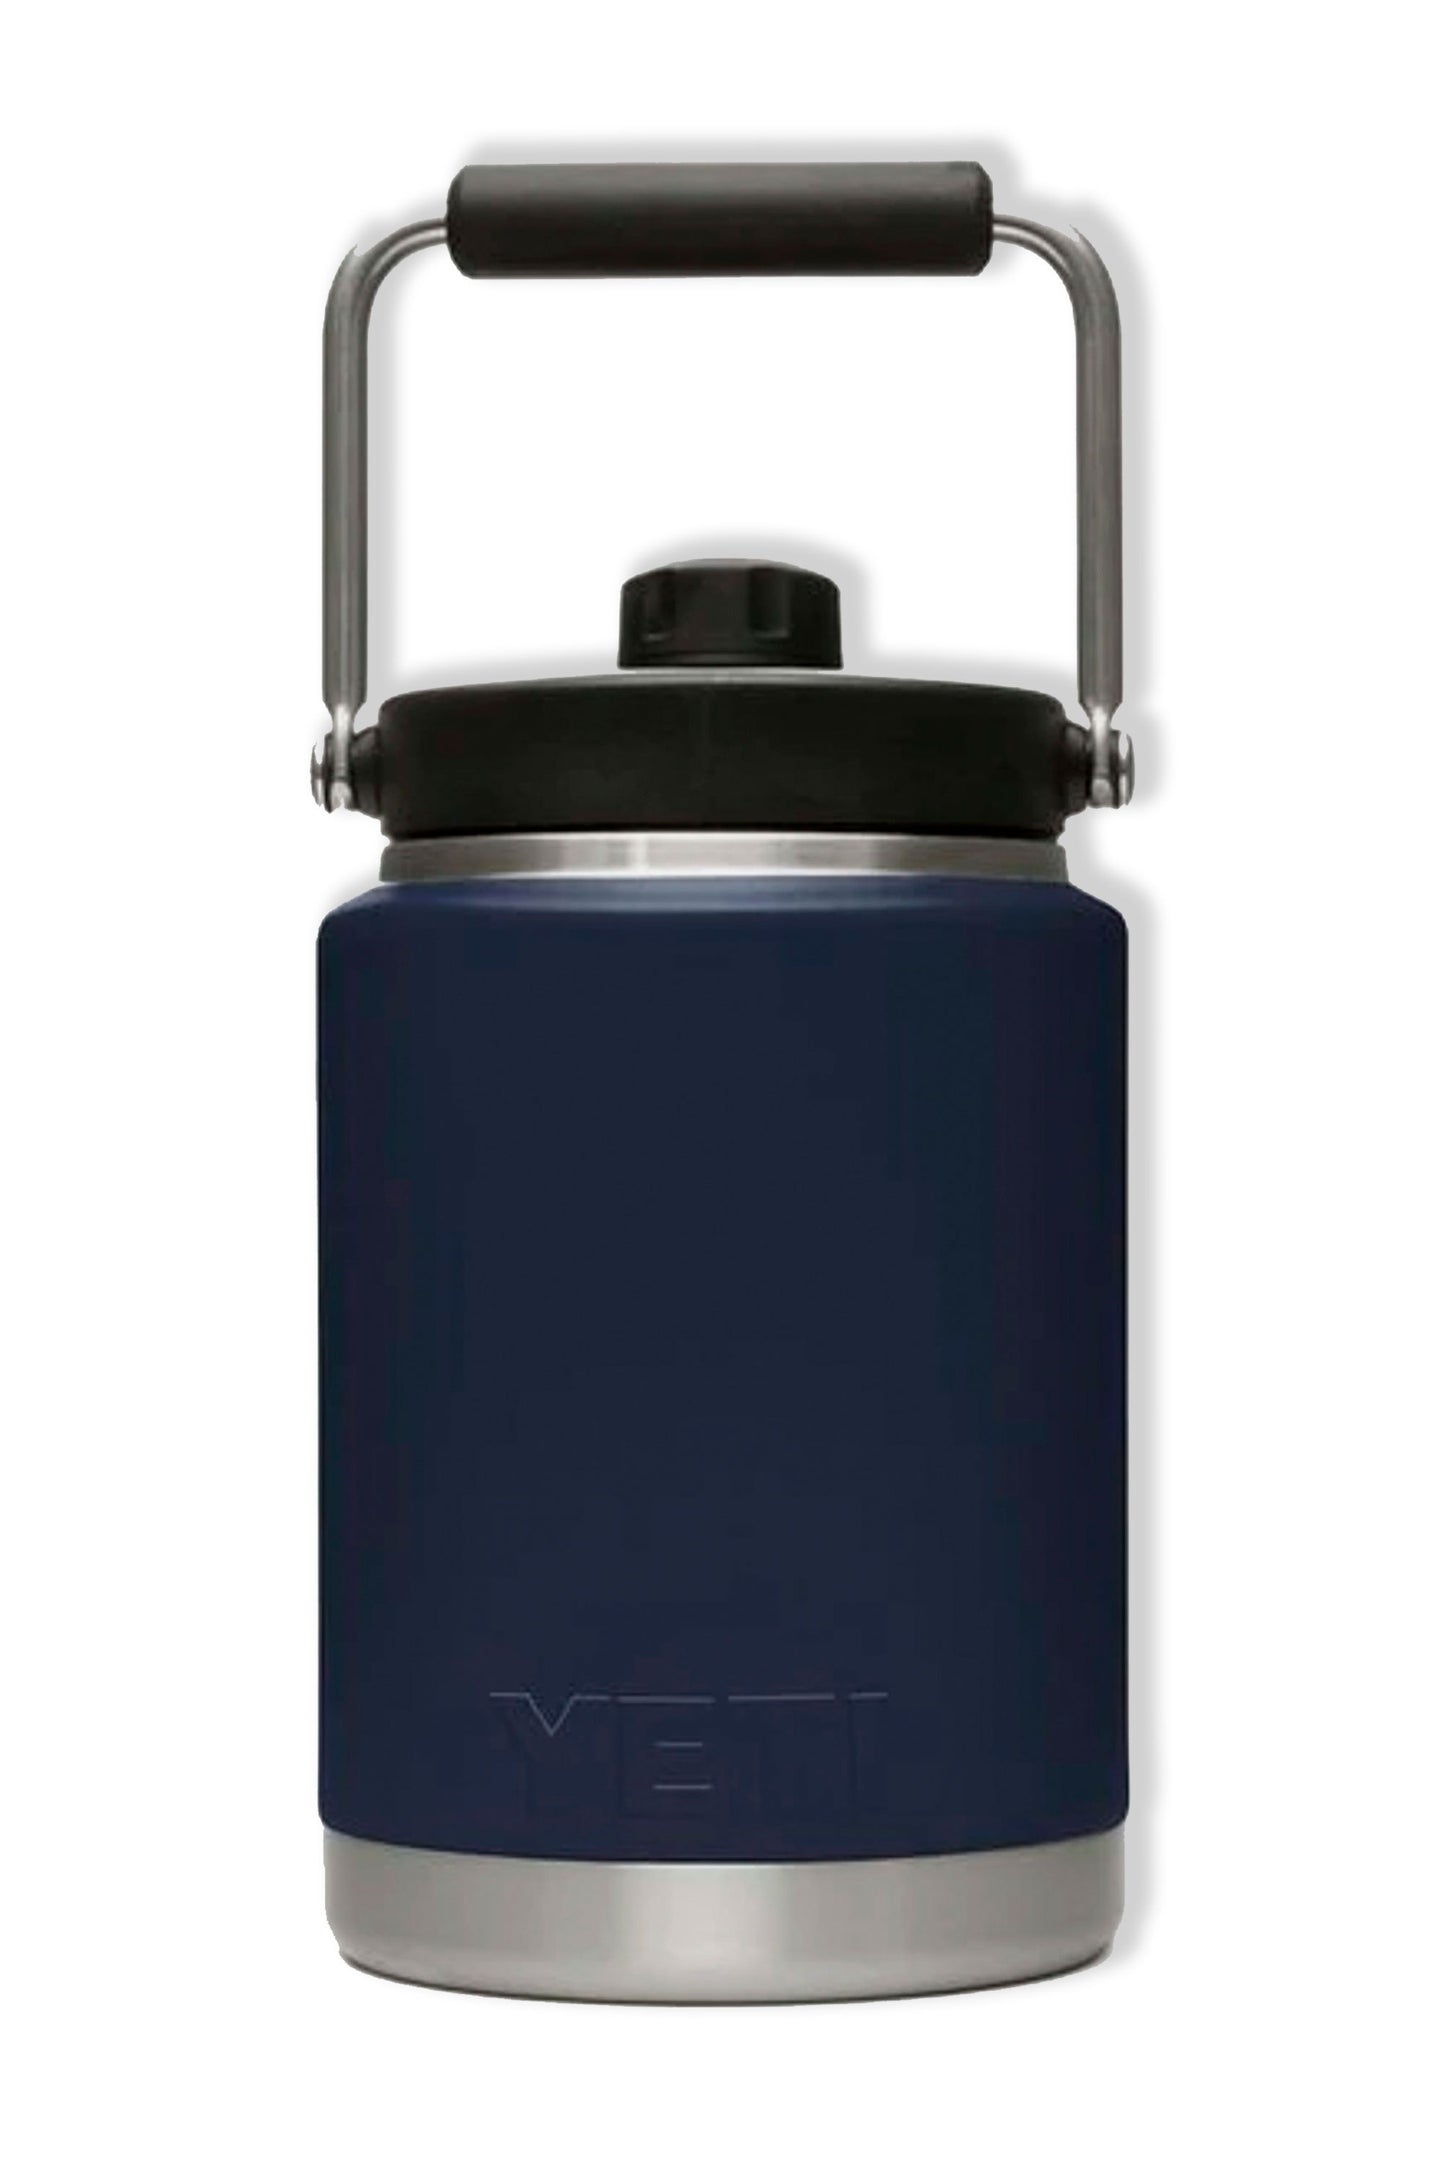 YETI® Rambler One Gallon Water Jug